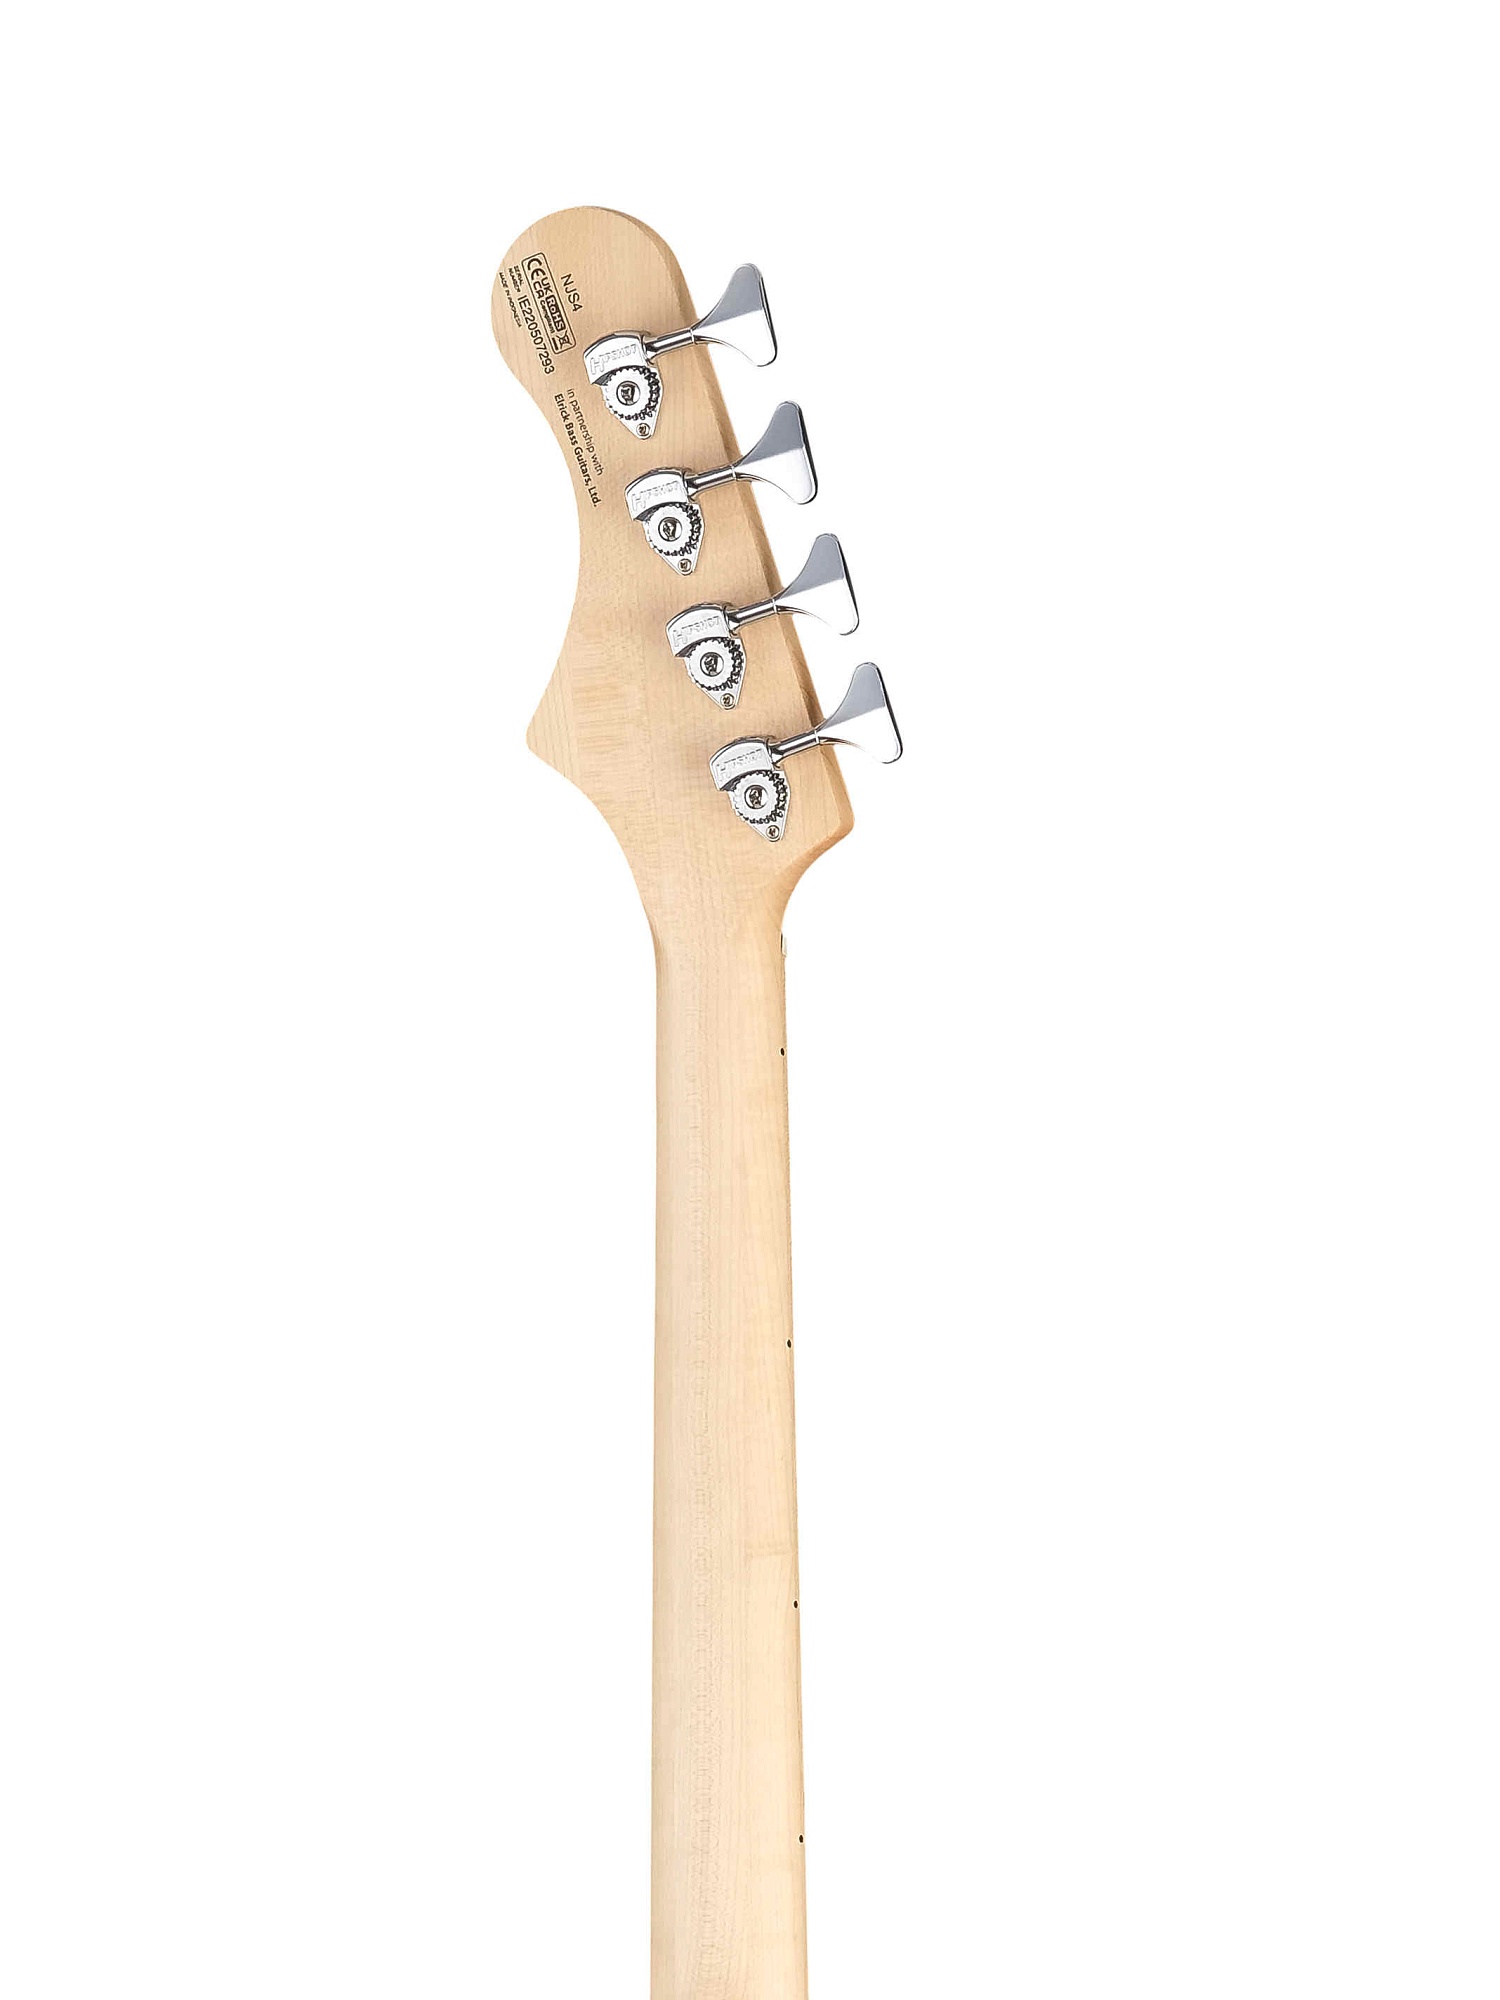 NJS4-WHT Elrick NJS Series Бас-гитара, белая, с чехлом, Cort купить в prostore.me